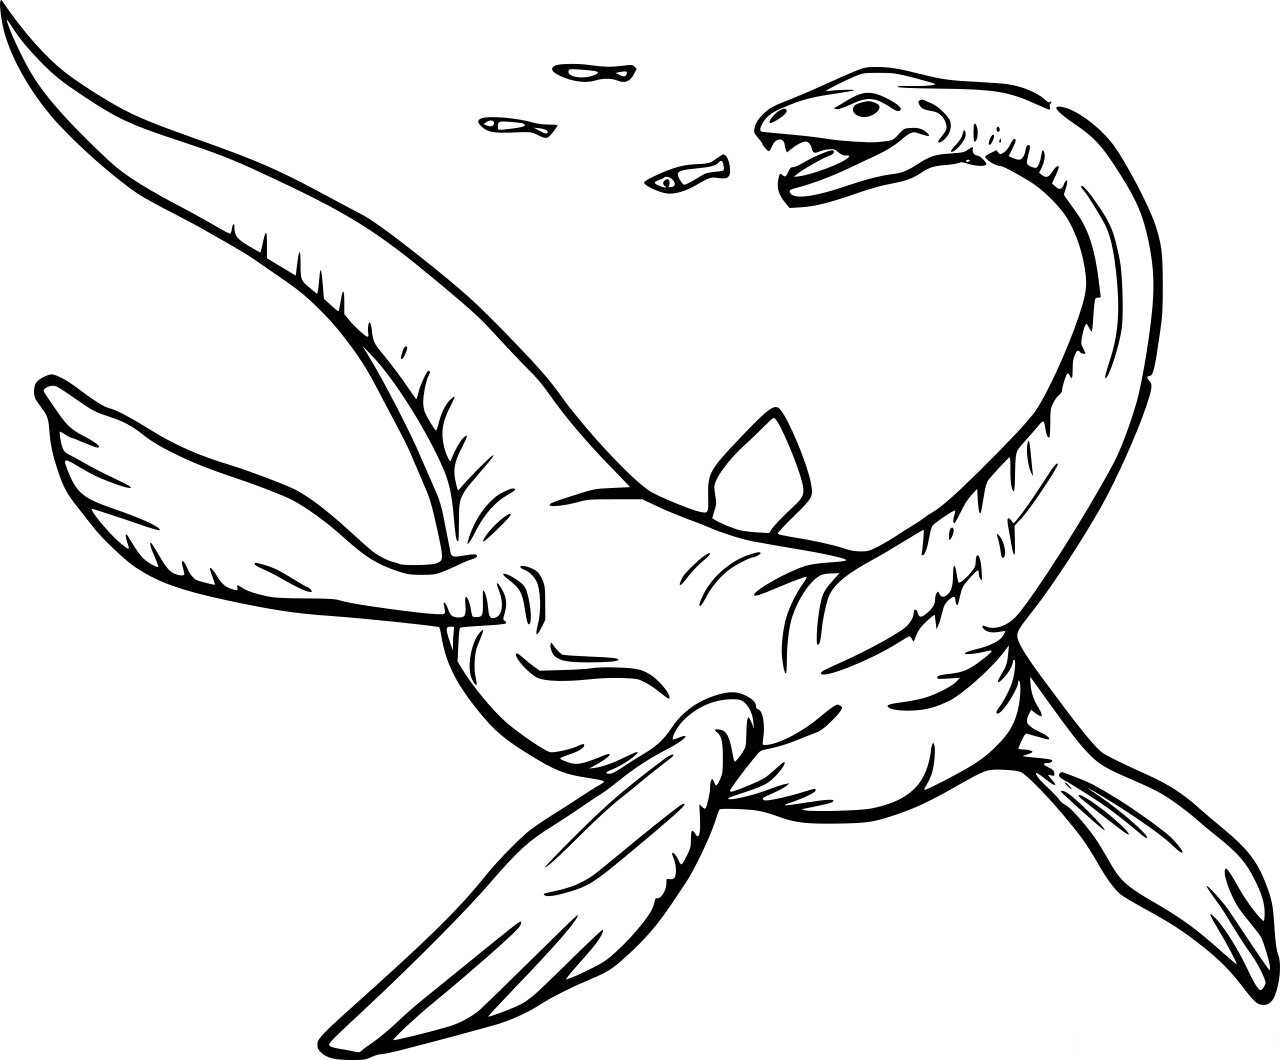 Dinosaure Plesiosaurus mangeant du poisson Coloriage